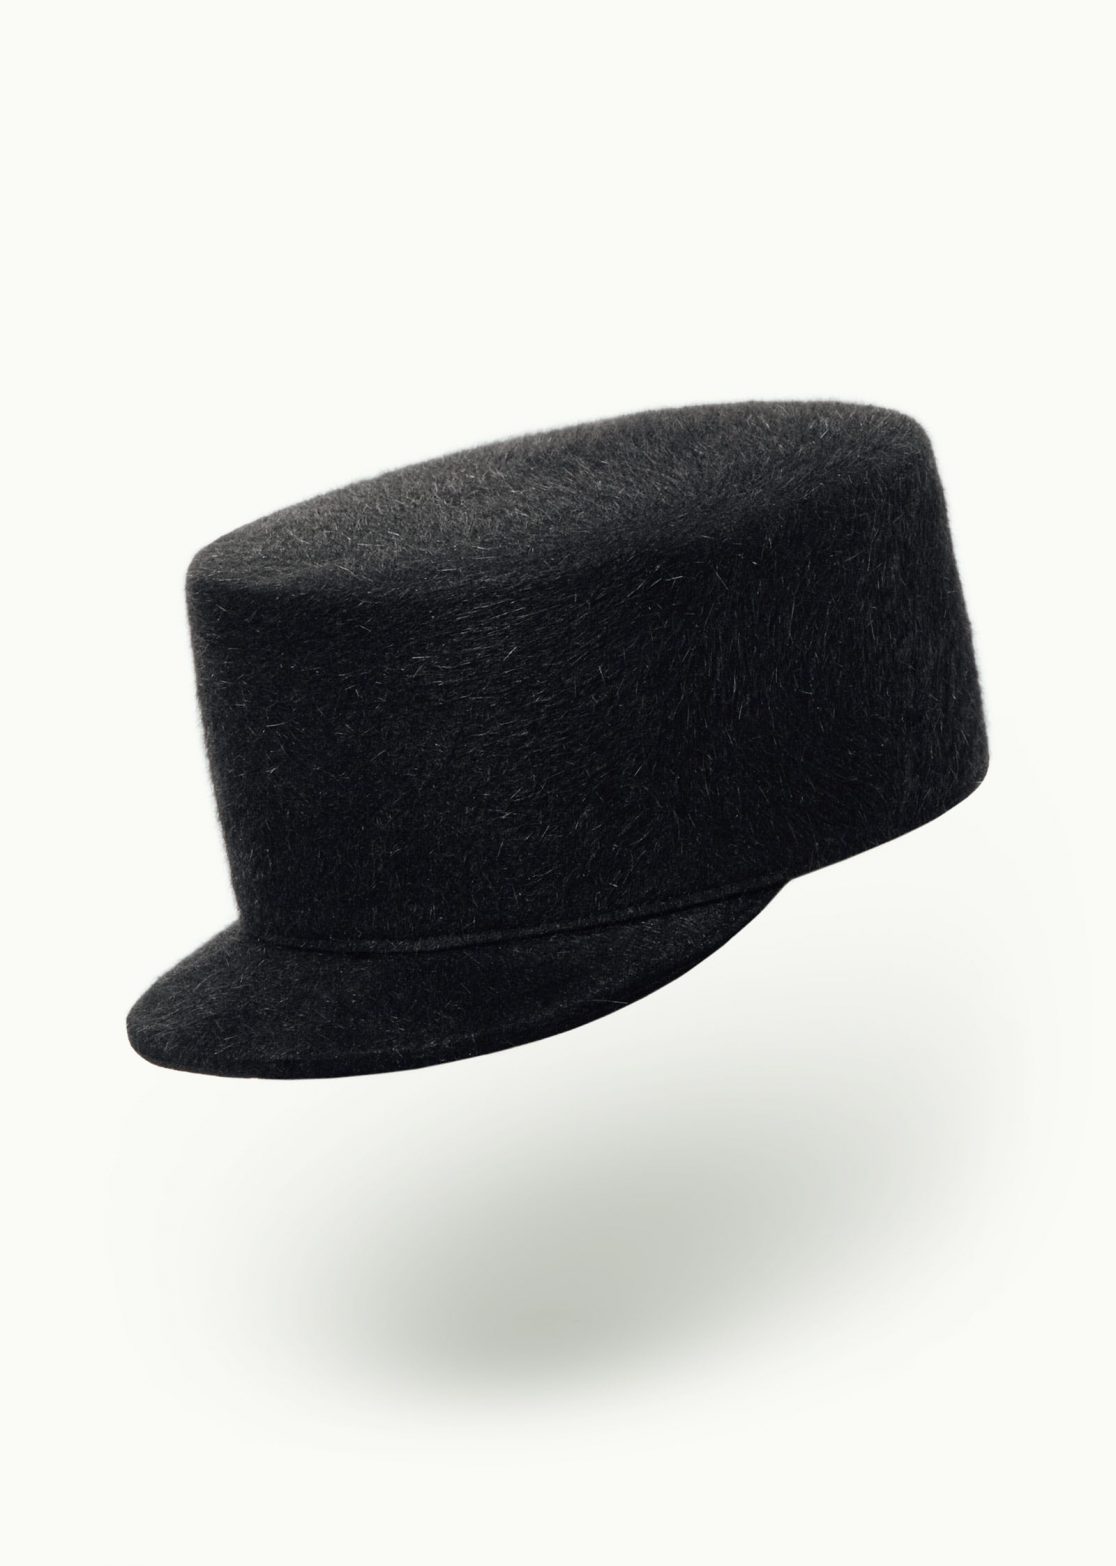 Hats - Women - Unisex - Men - Sandarm Black Spiked Image Primary